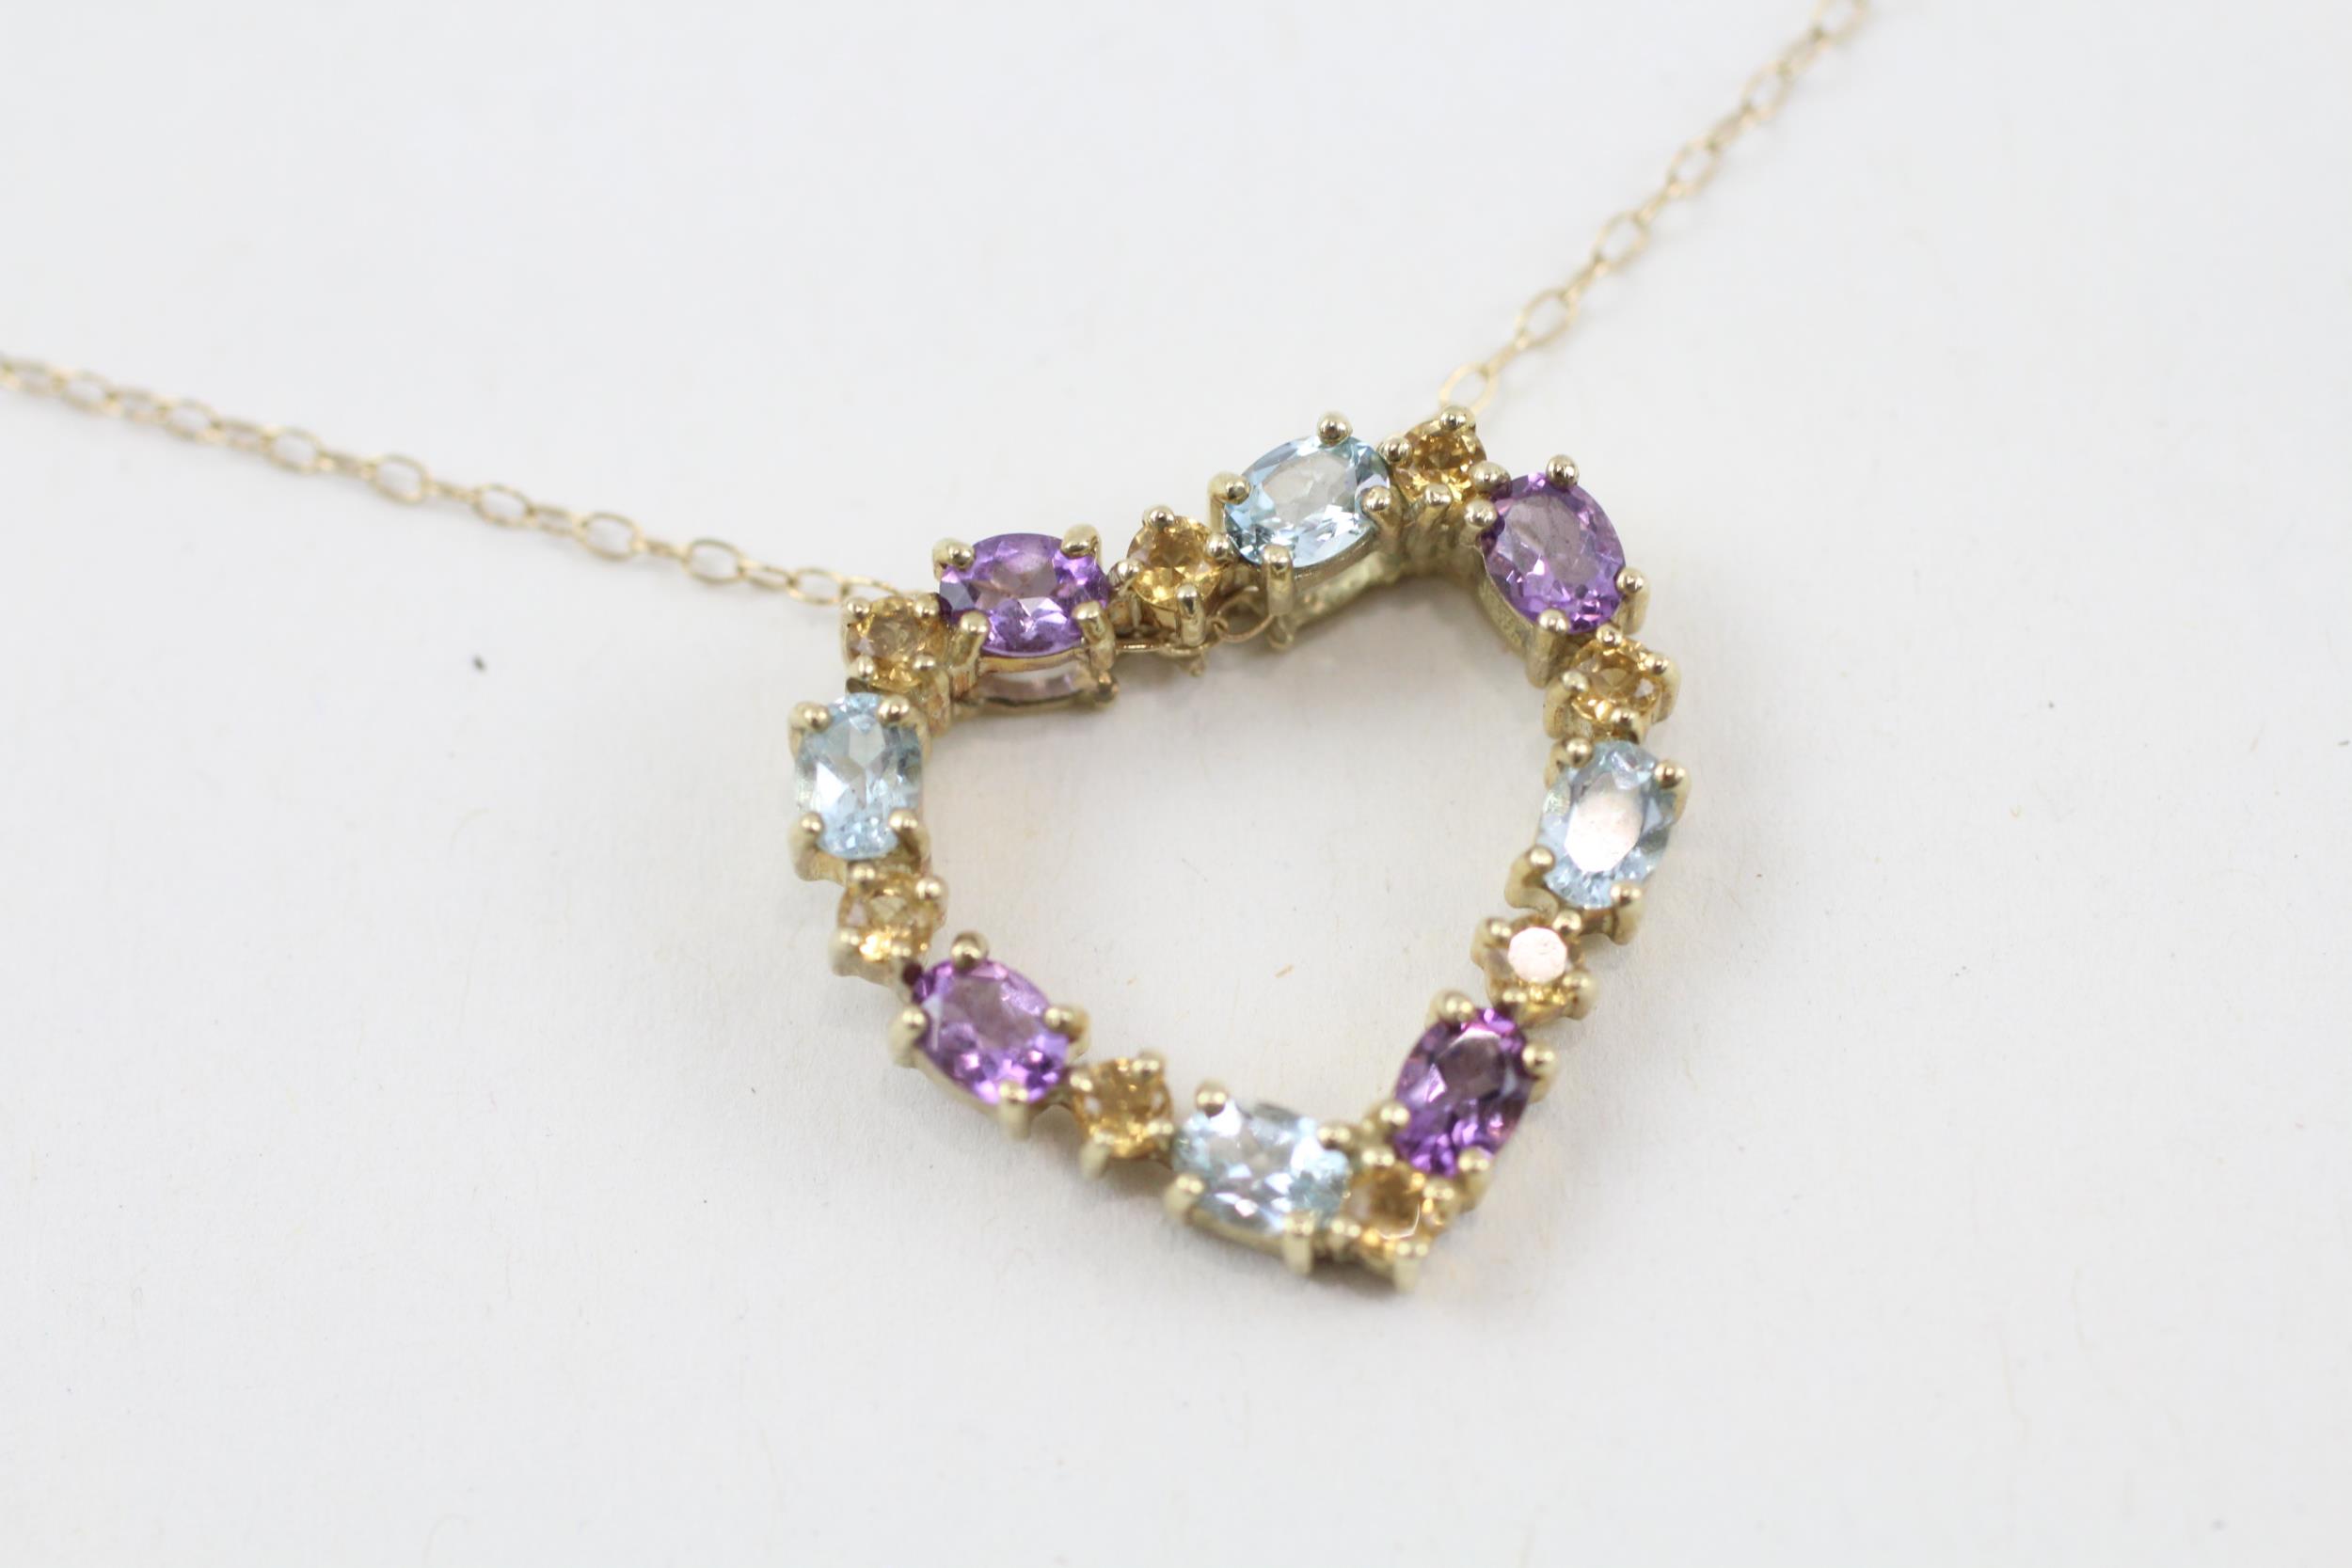 9ct gold multi-gemstone heart pendant necklace inc. amethyst, topaz & citrine (3.5g)